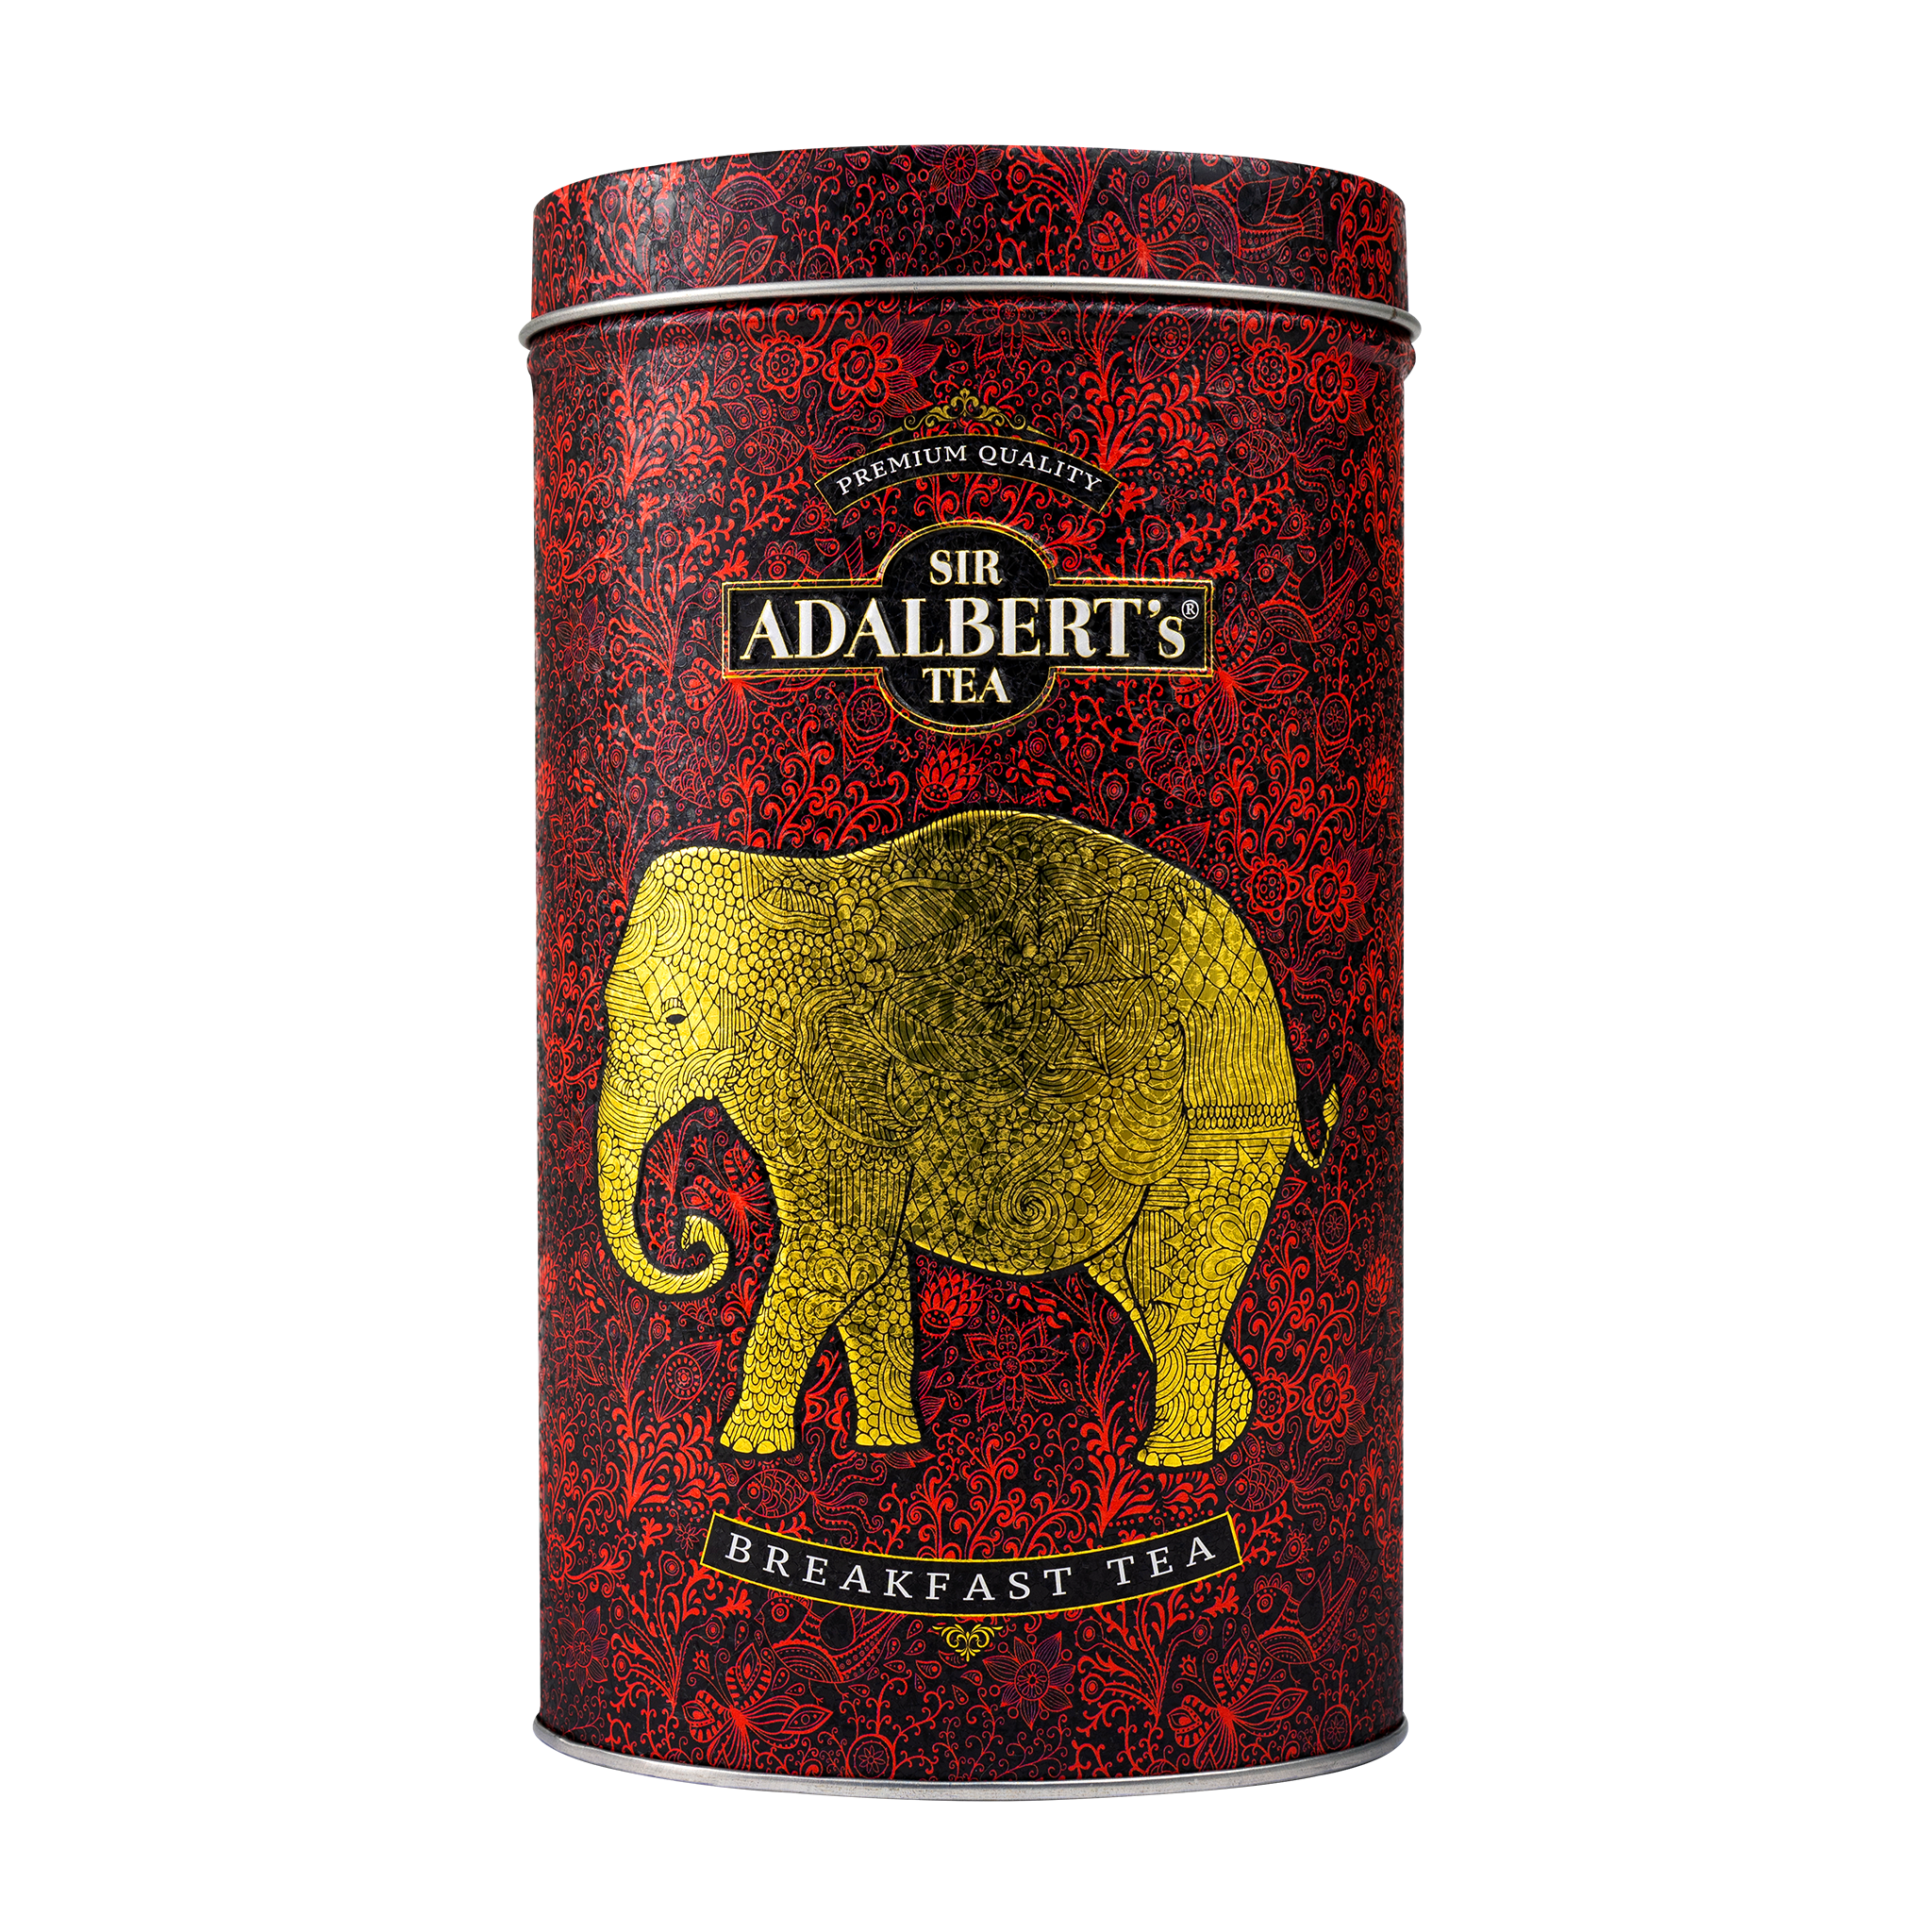 Adalbert's Tea ENGLISH BREAKFAST TEA - Leaf 110g in a can